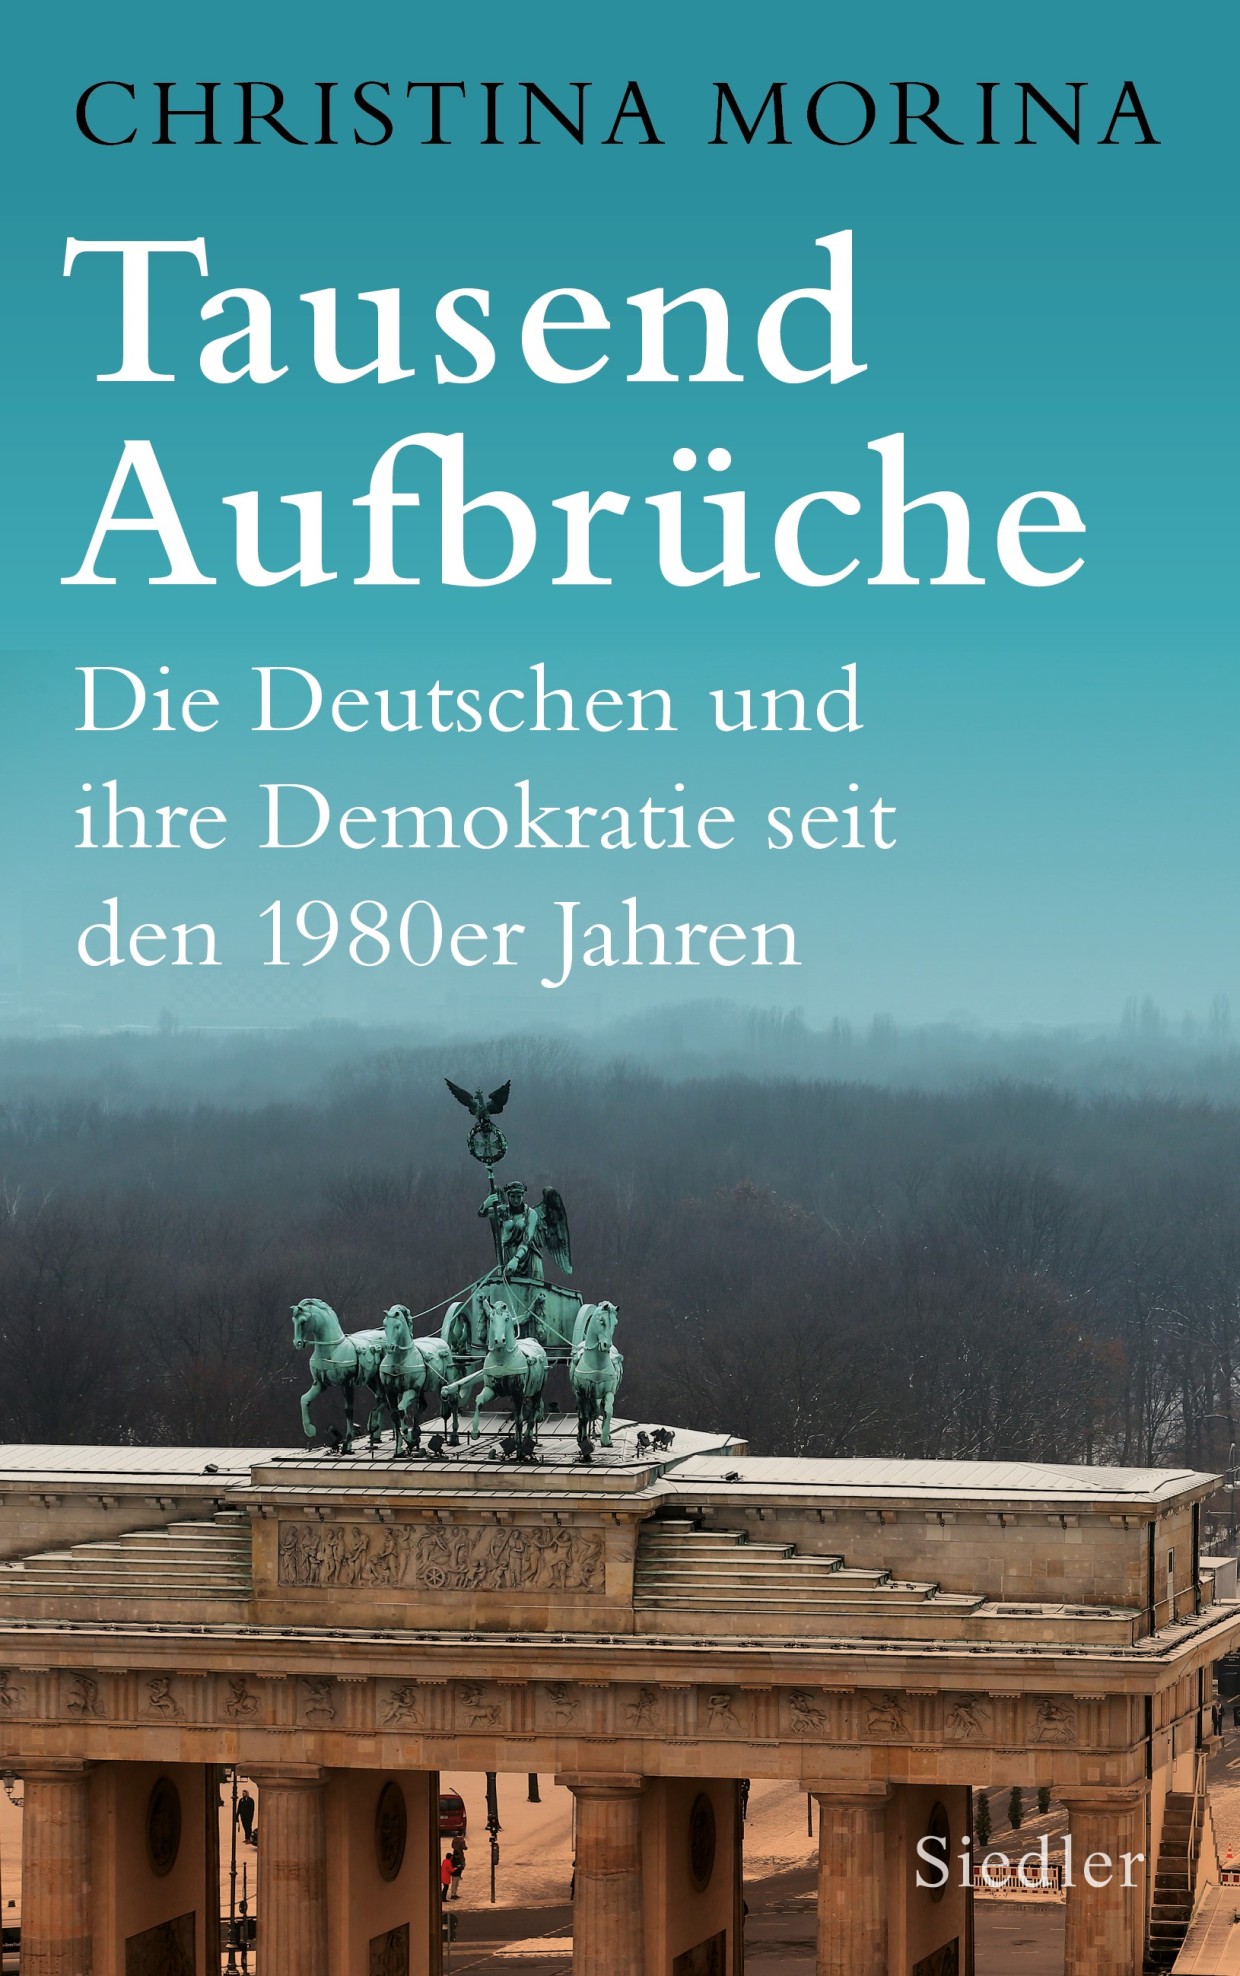 Cover des Buchtitels "Tausend Aufbrueche"